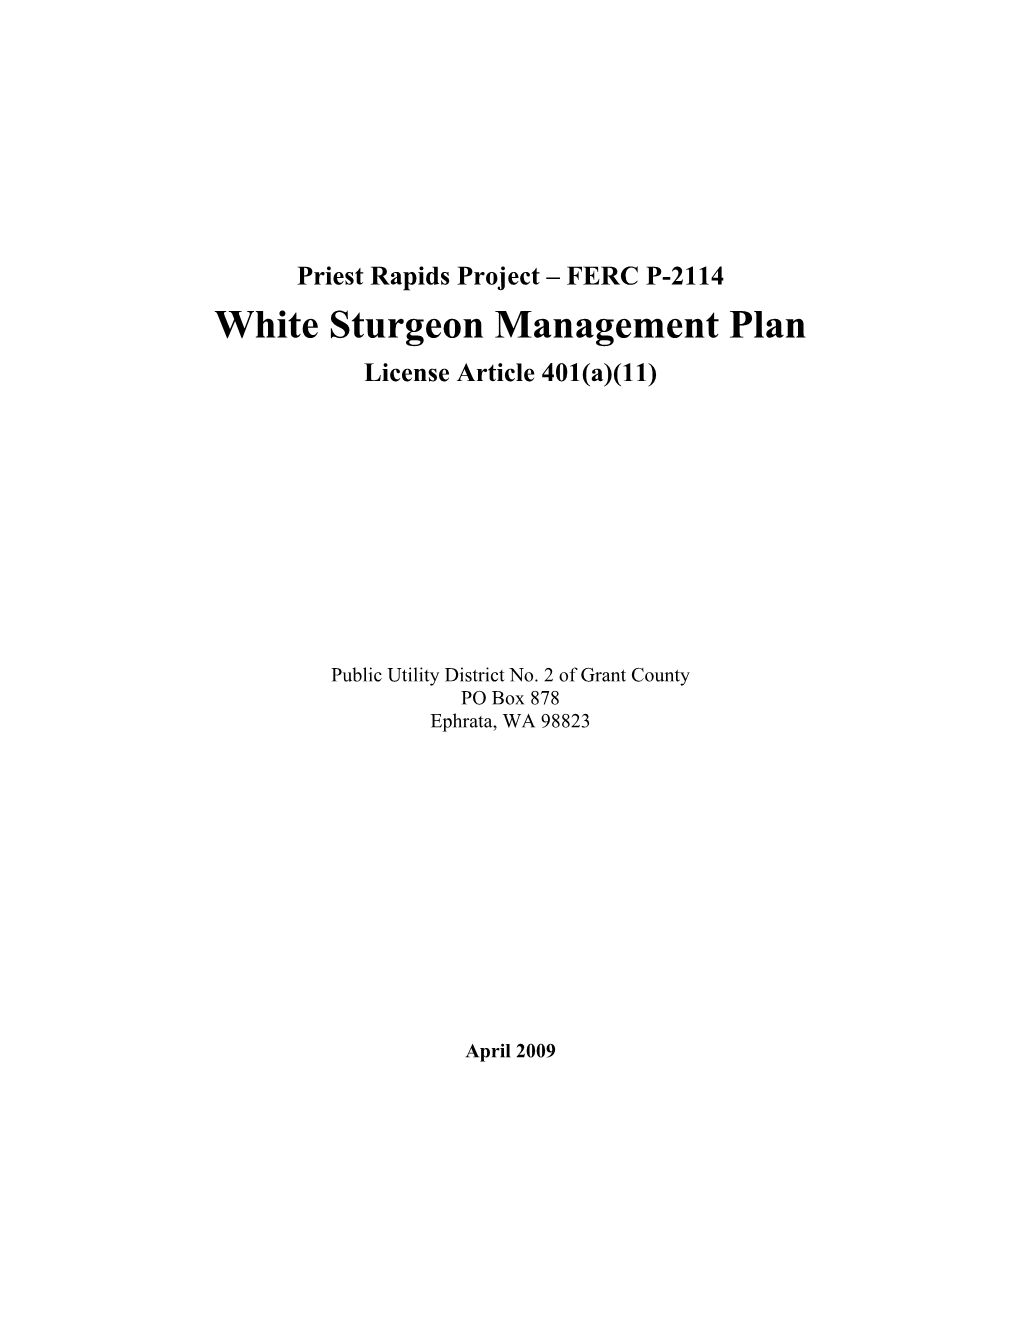 White Sturgeon Management Plan License Article 401(A)(11)